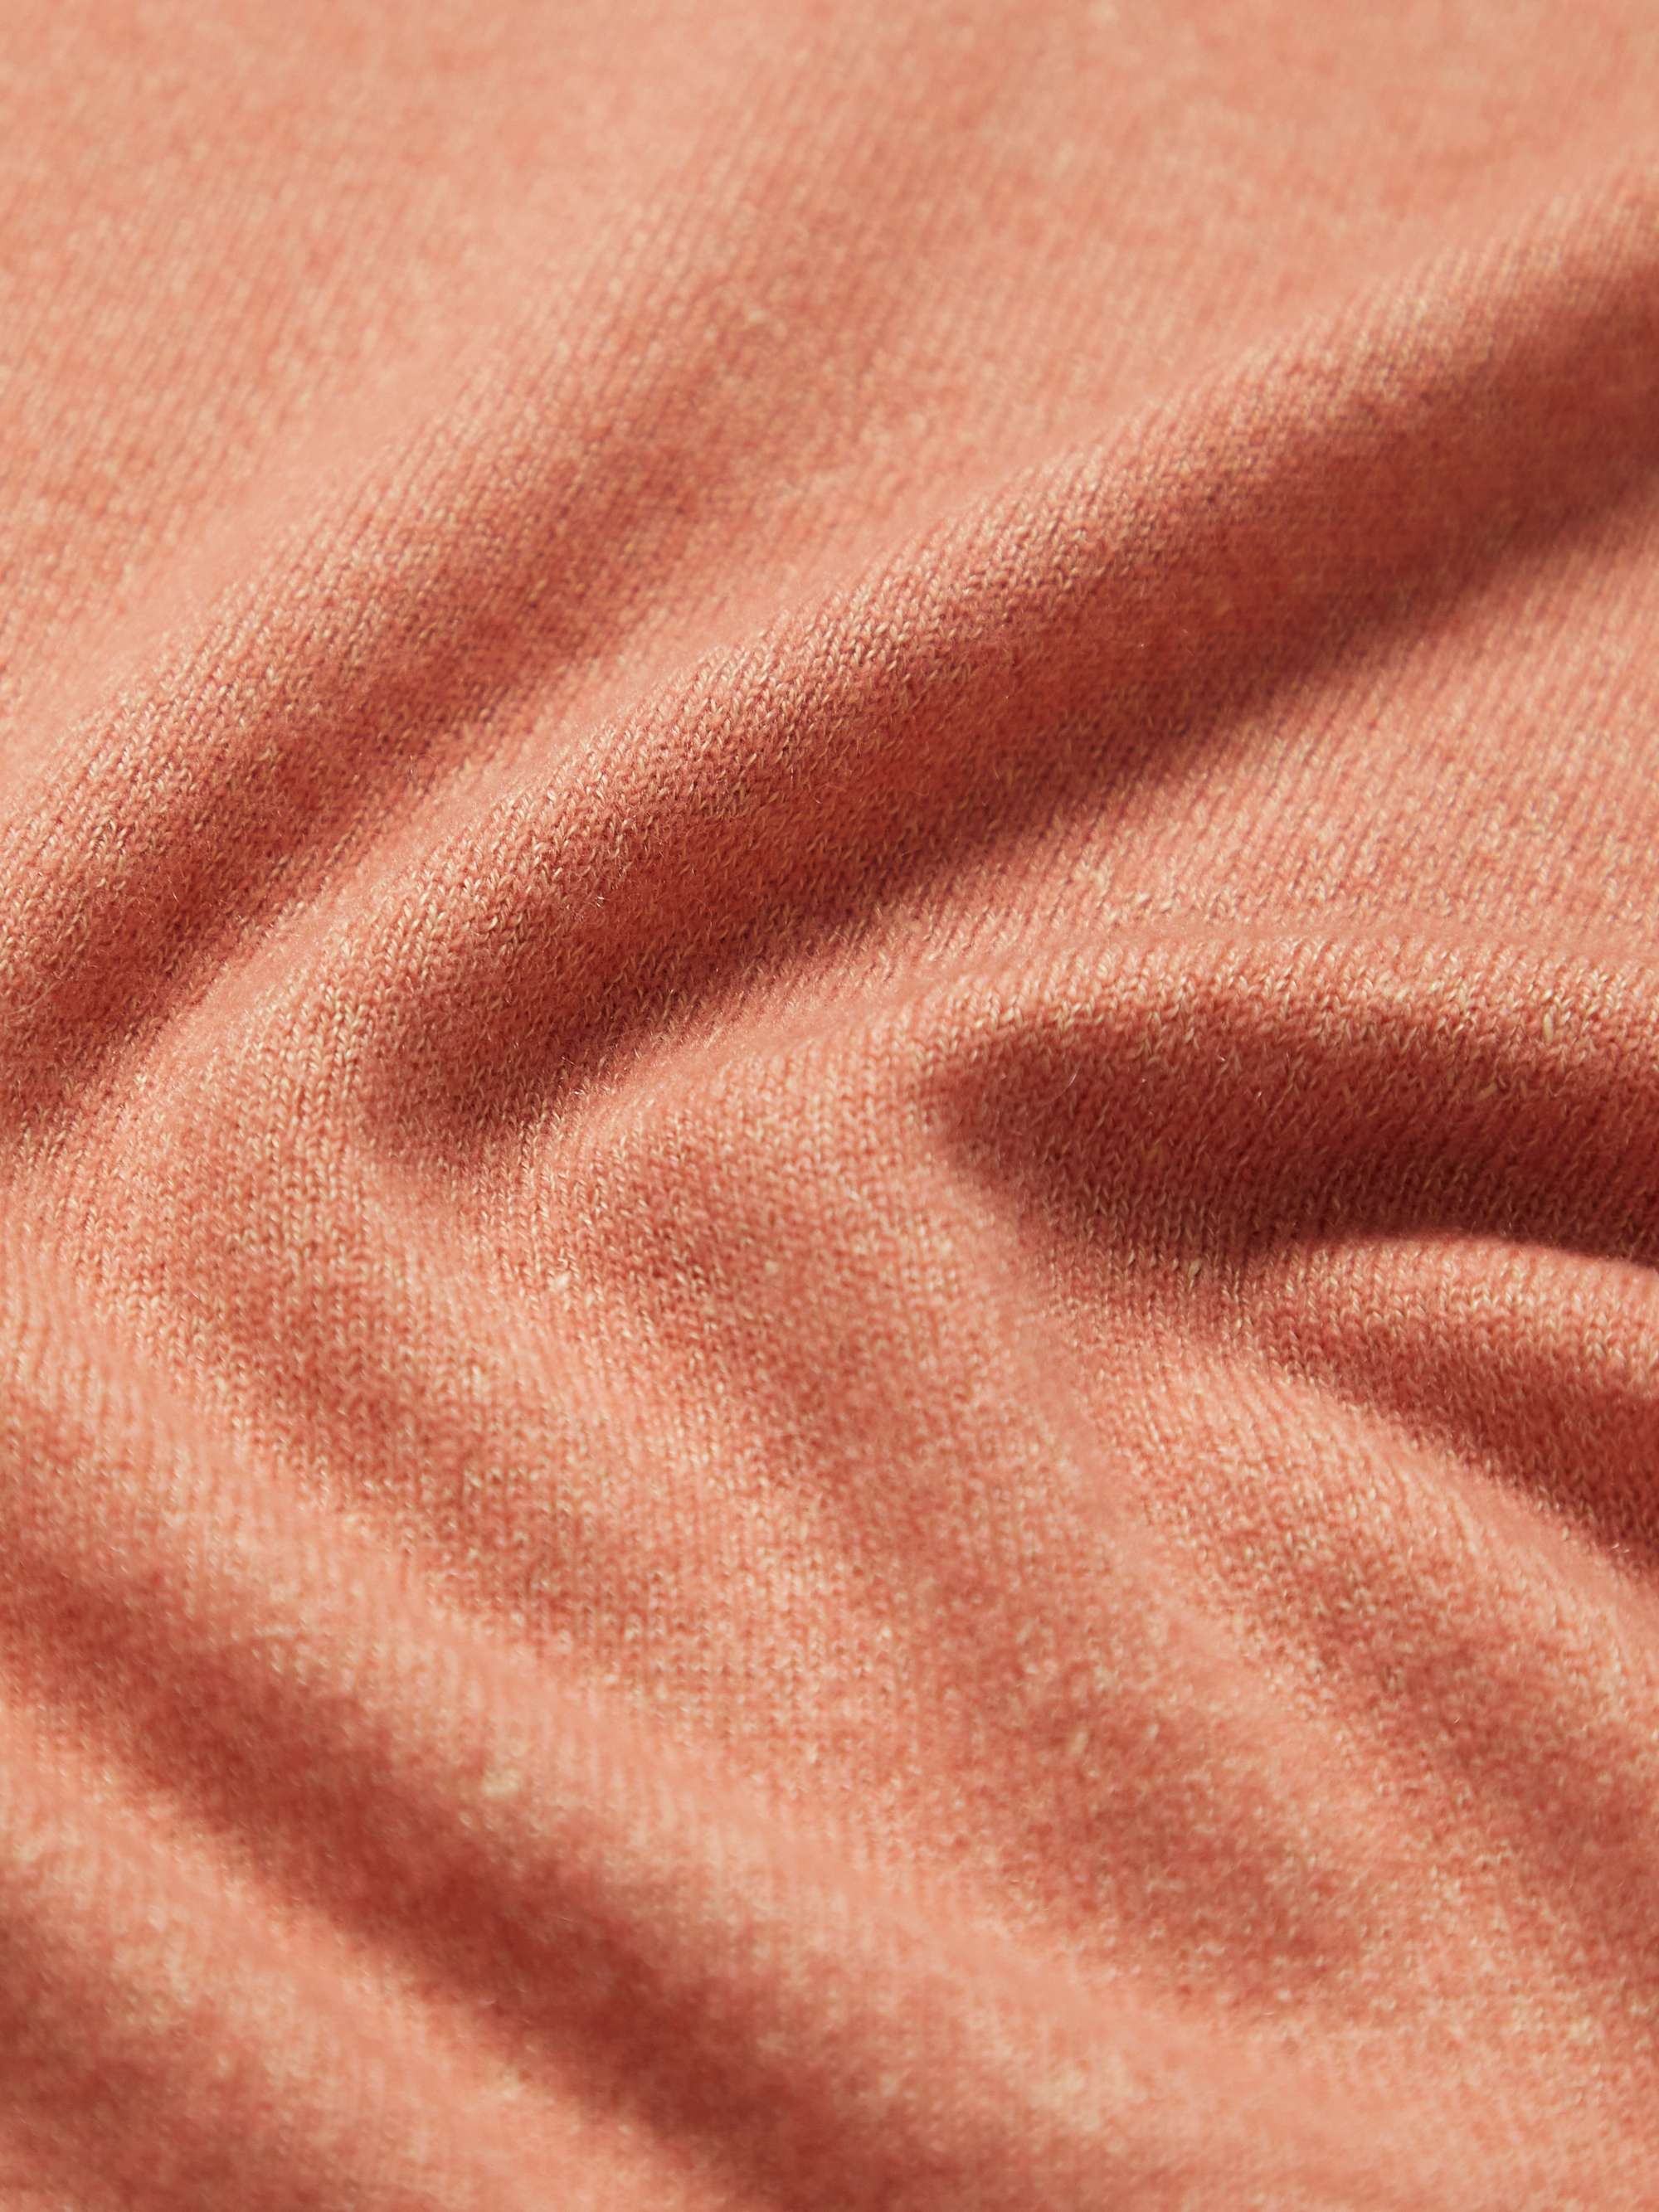 KINGSMAN Striped Cotton and Cashmere-Blend Jersey Sweatshirt